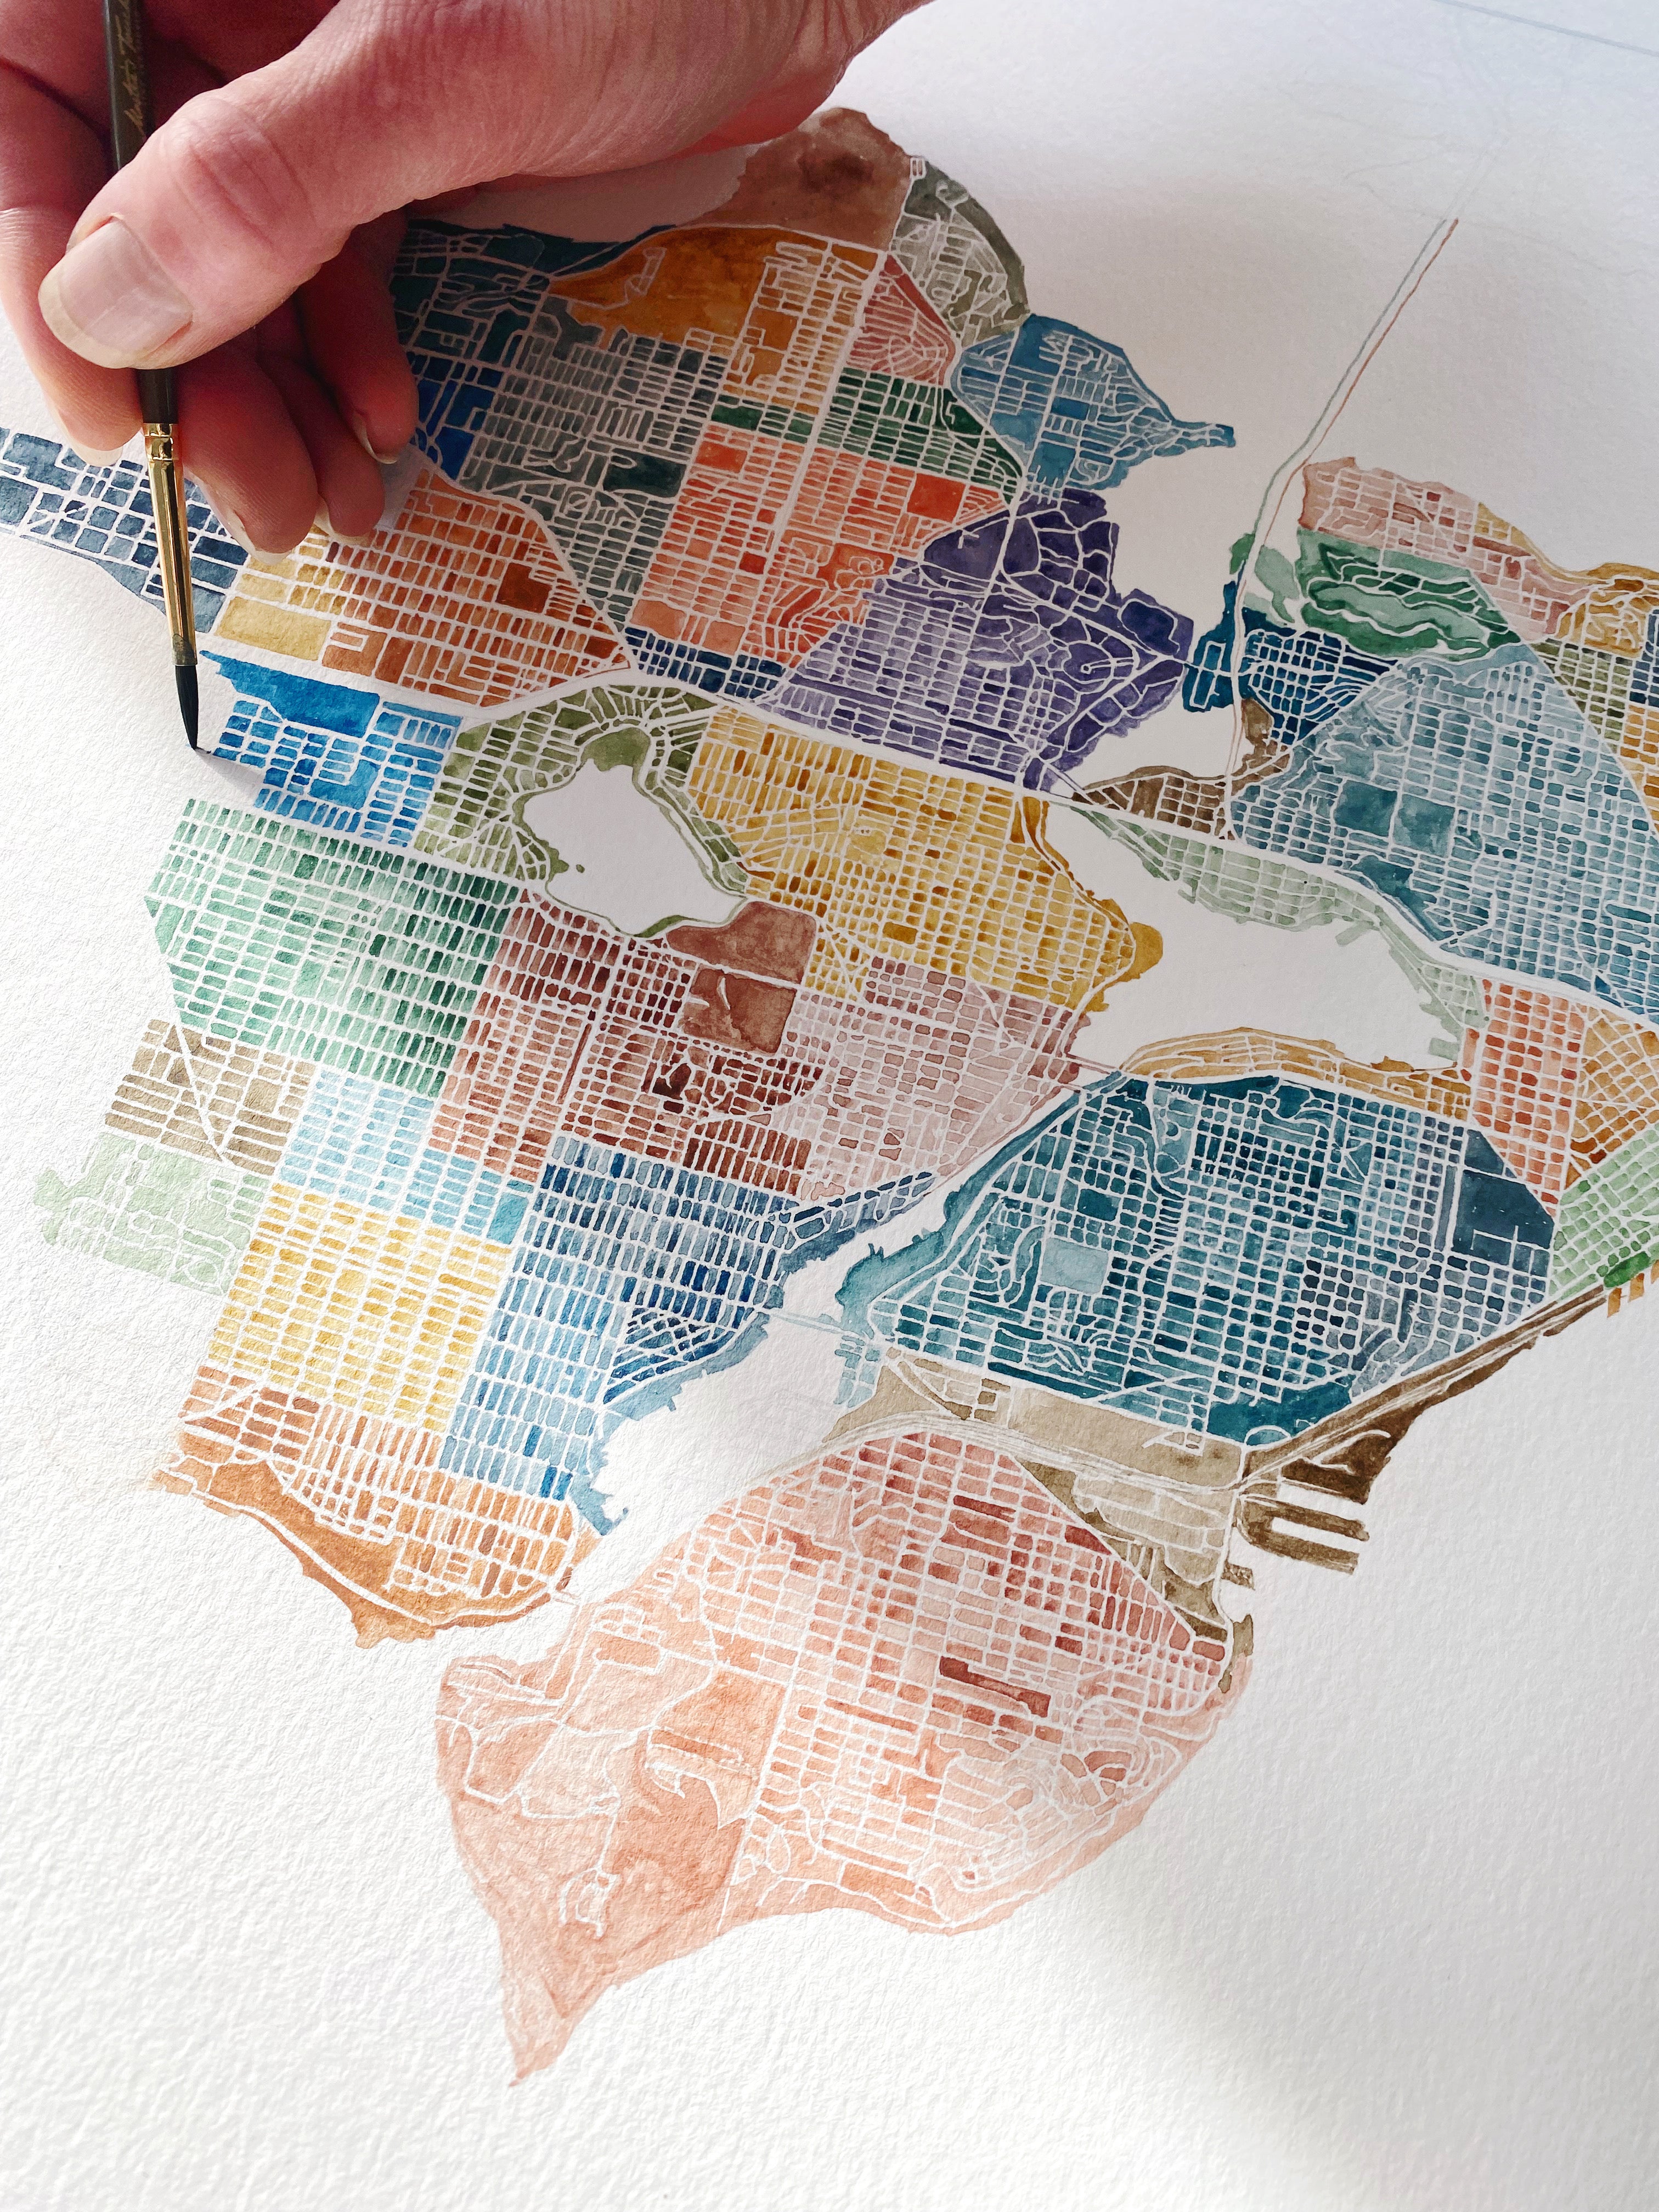 SEATTLE Neighborhoods Watercolor City Blocks Map: PRINT